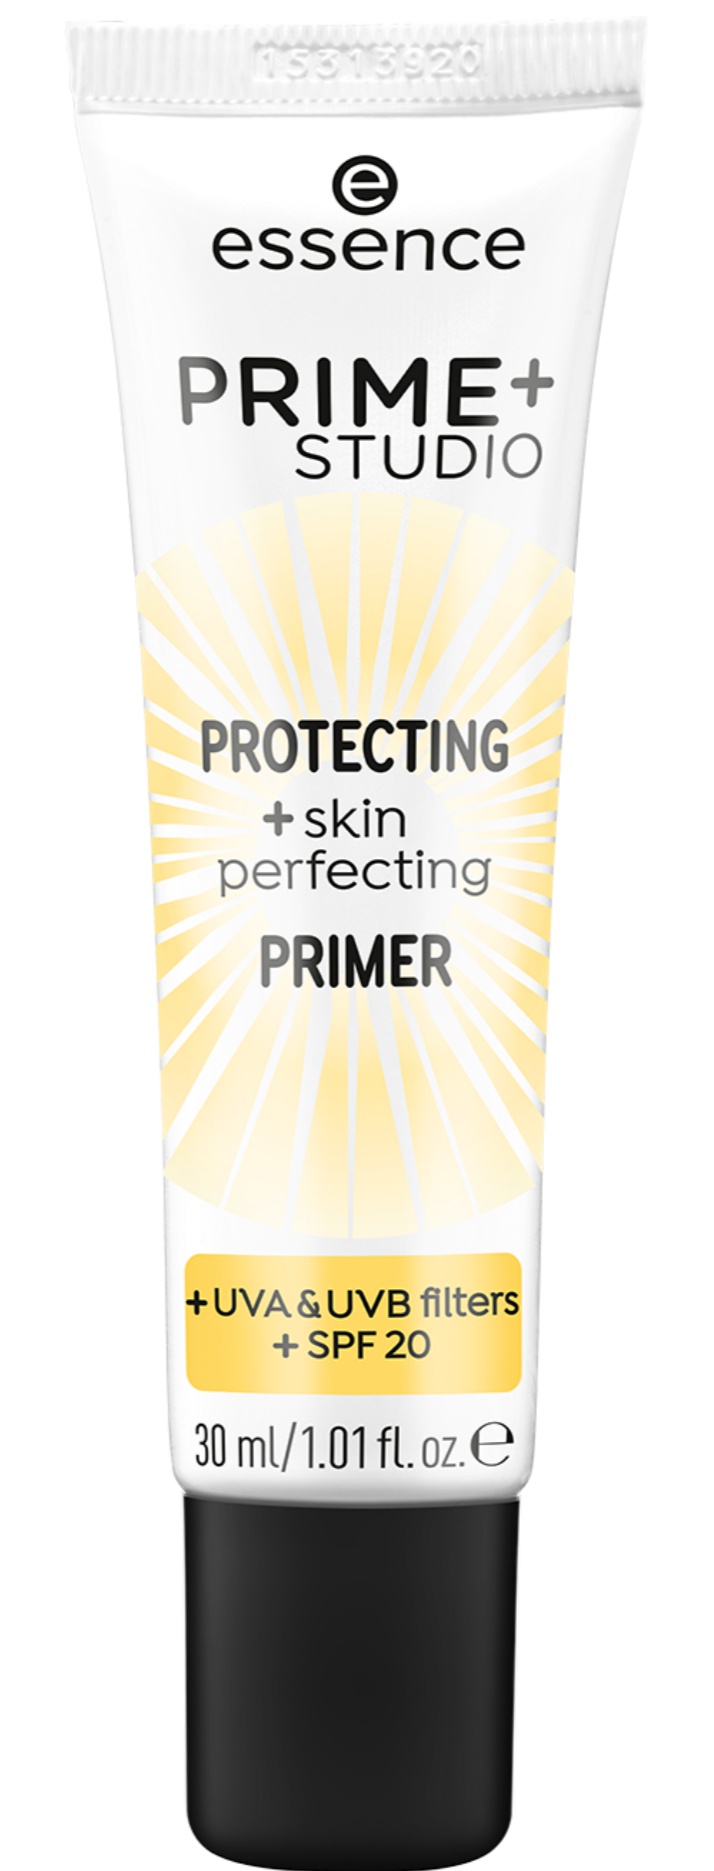 Essence Prime+ Studio Protecting + Skin Perfecting Primer